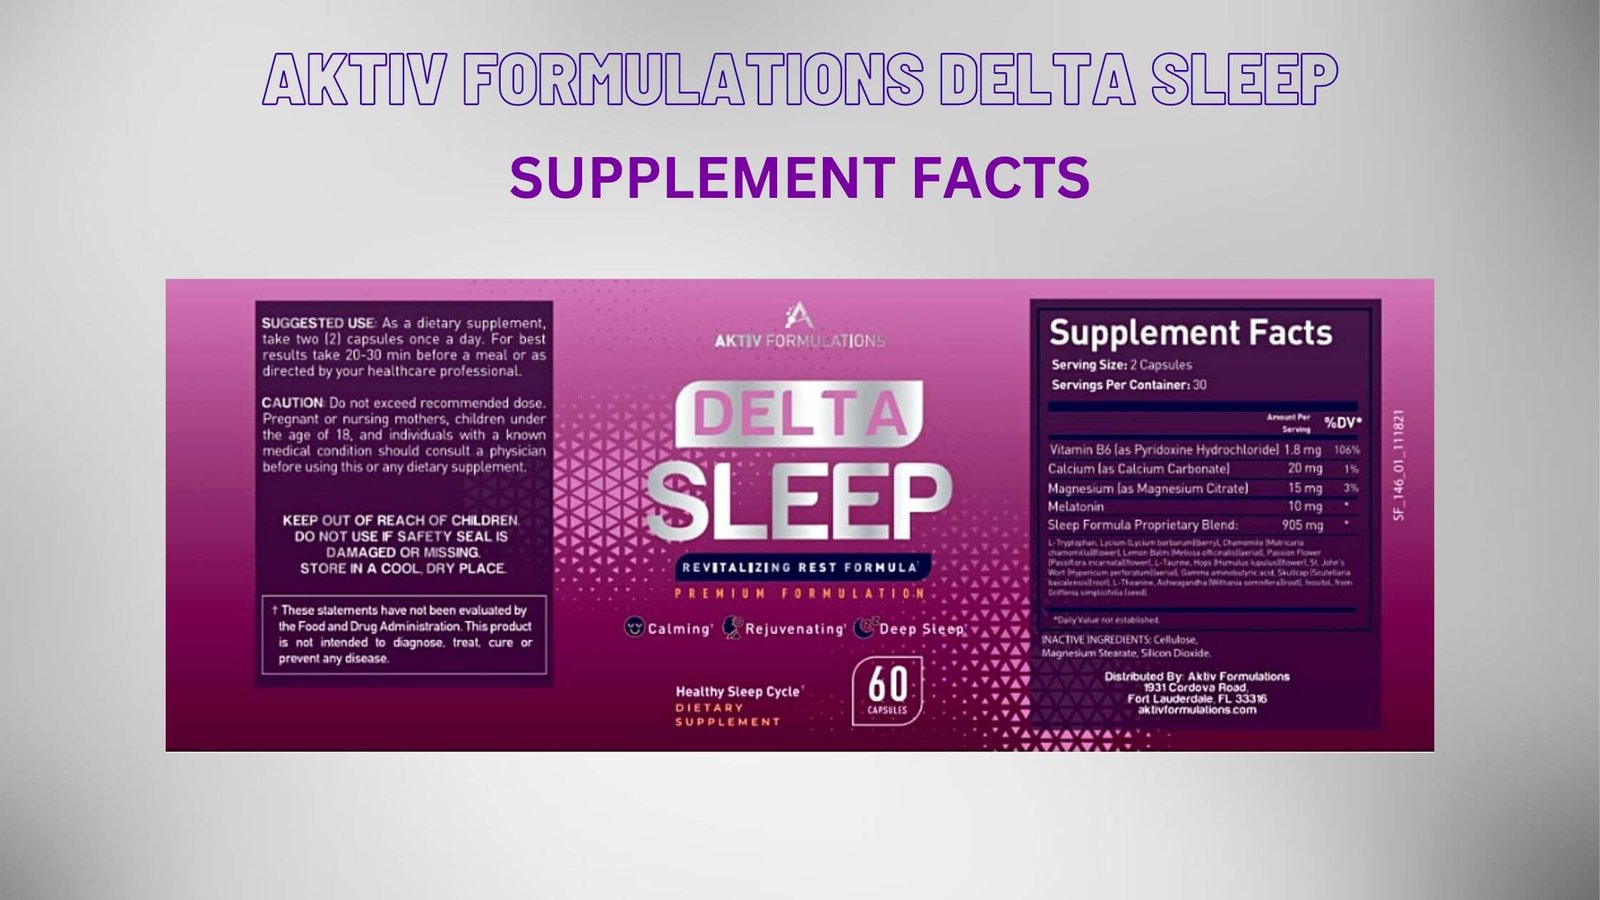 Aktiv Formulations Delta Sleep Dosage